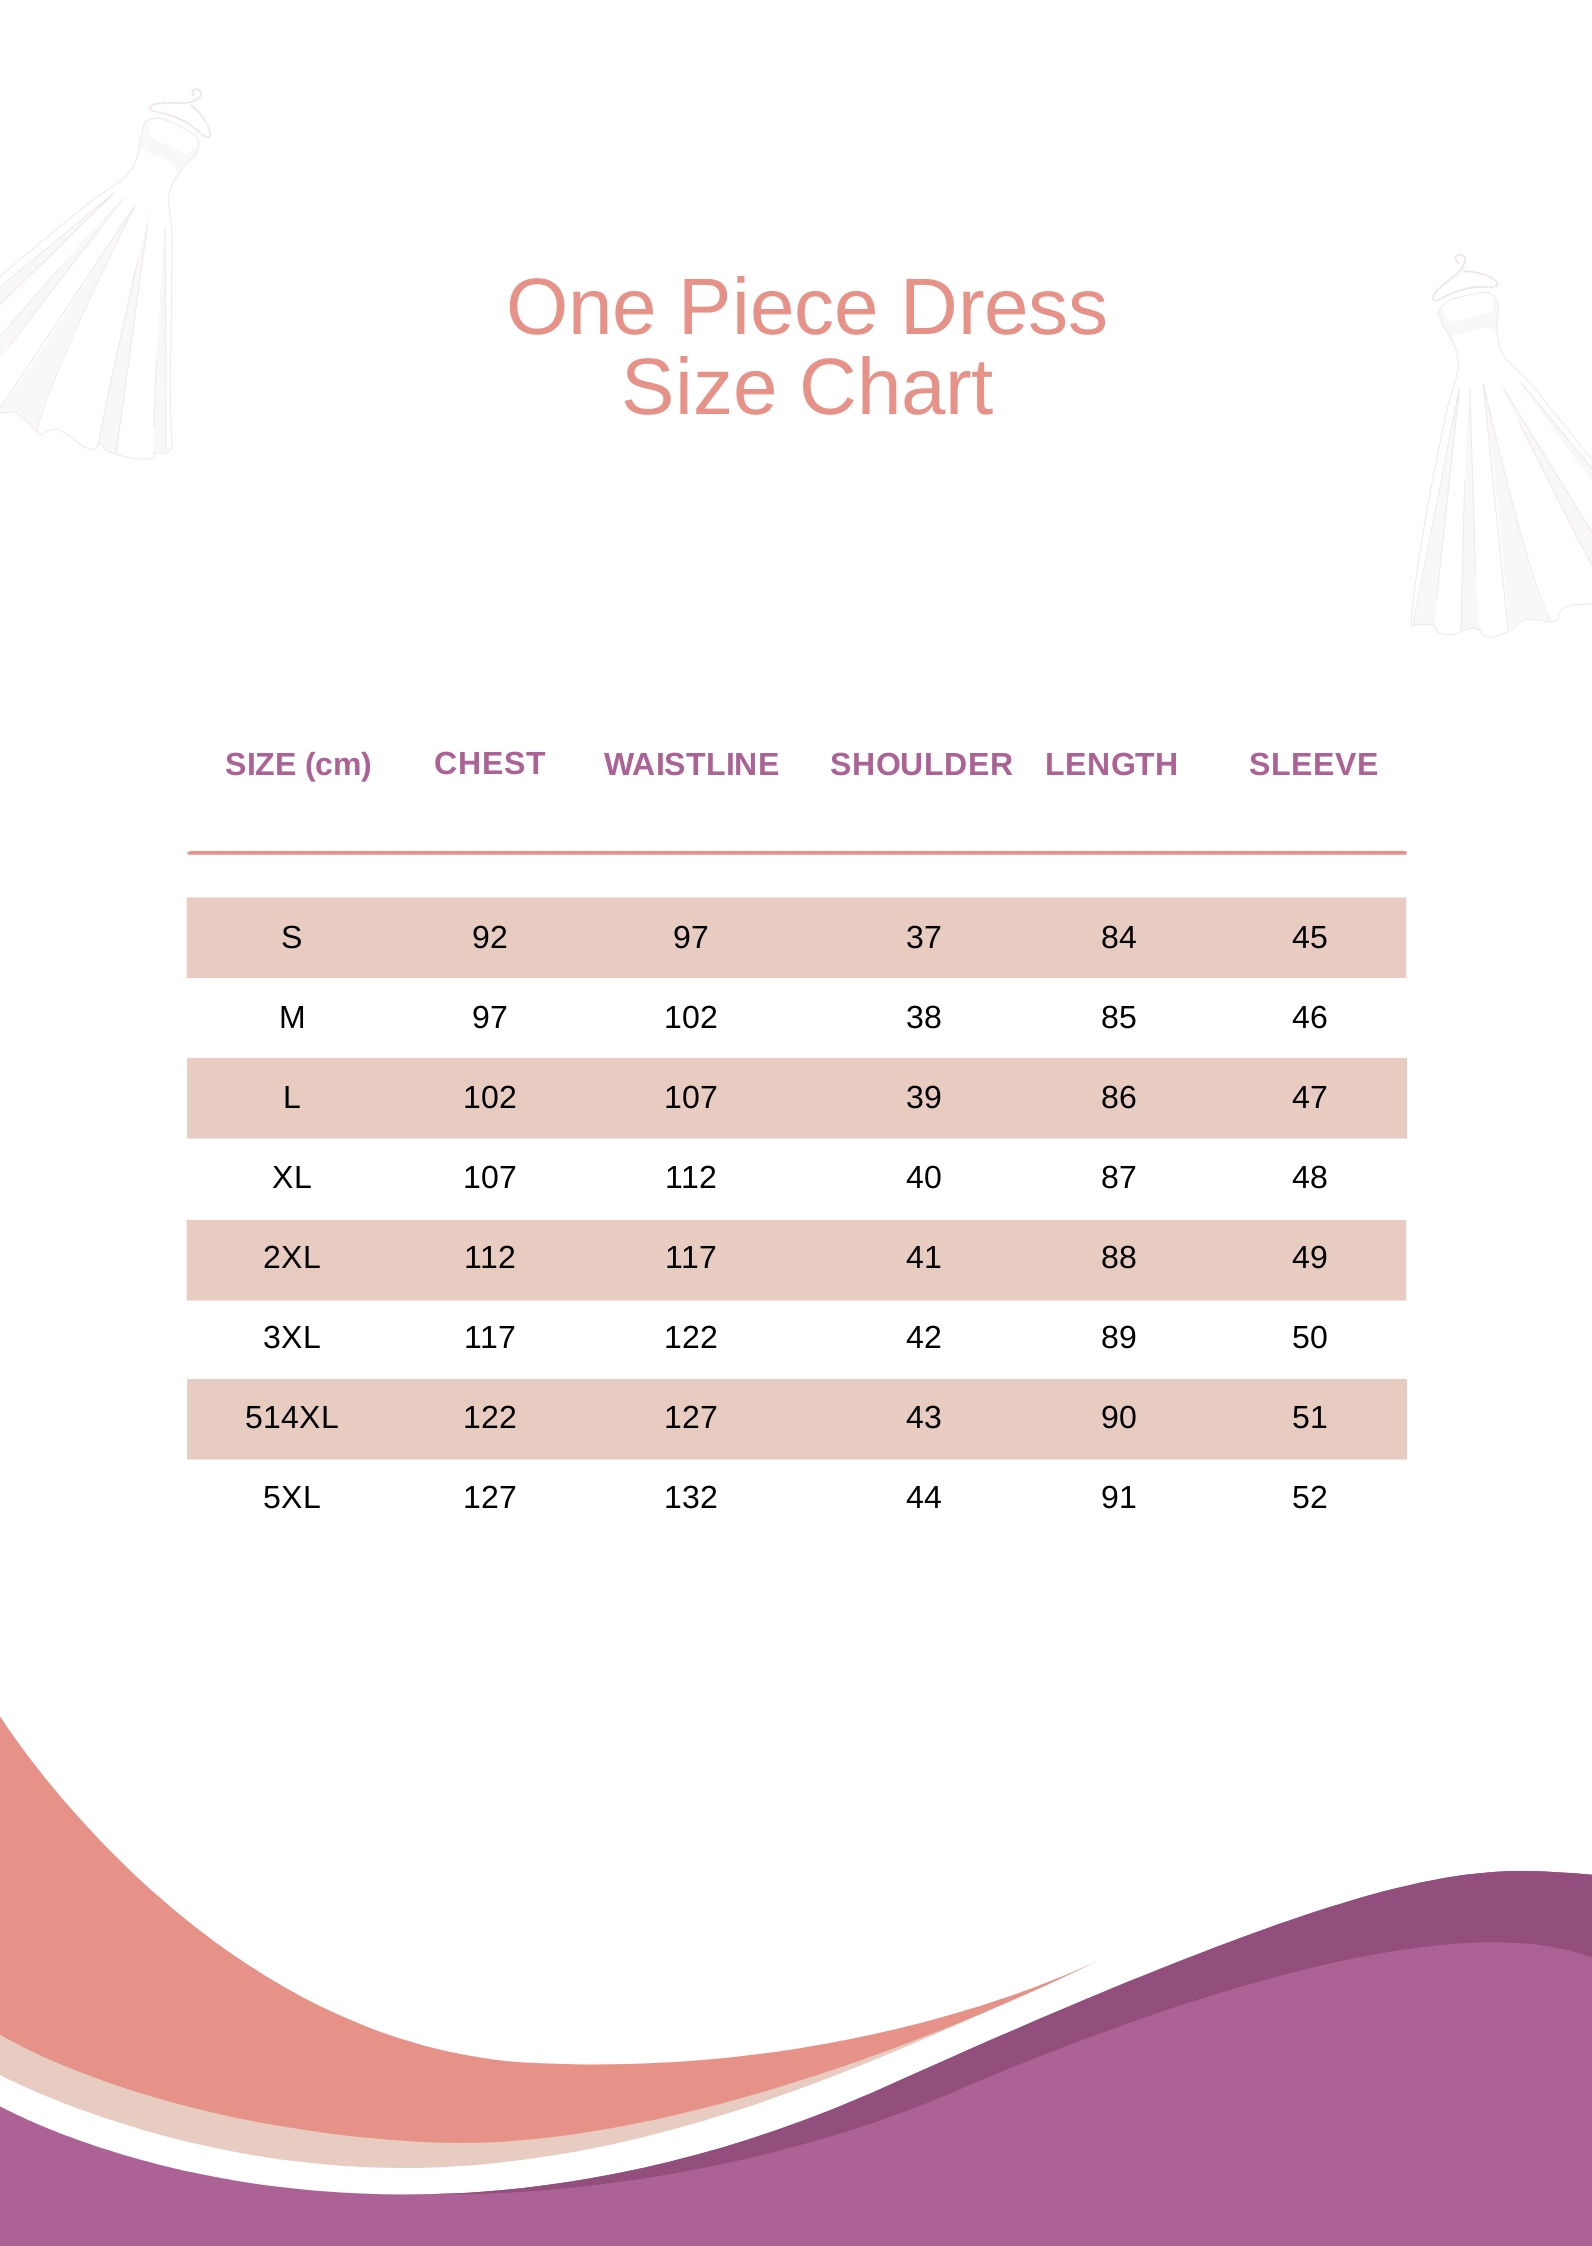 One Piece Dress Size Chart in PDF